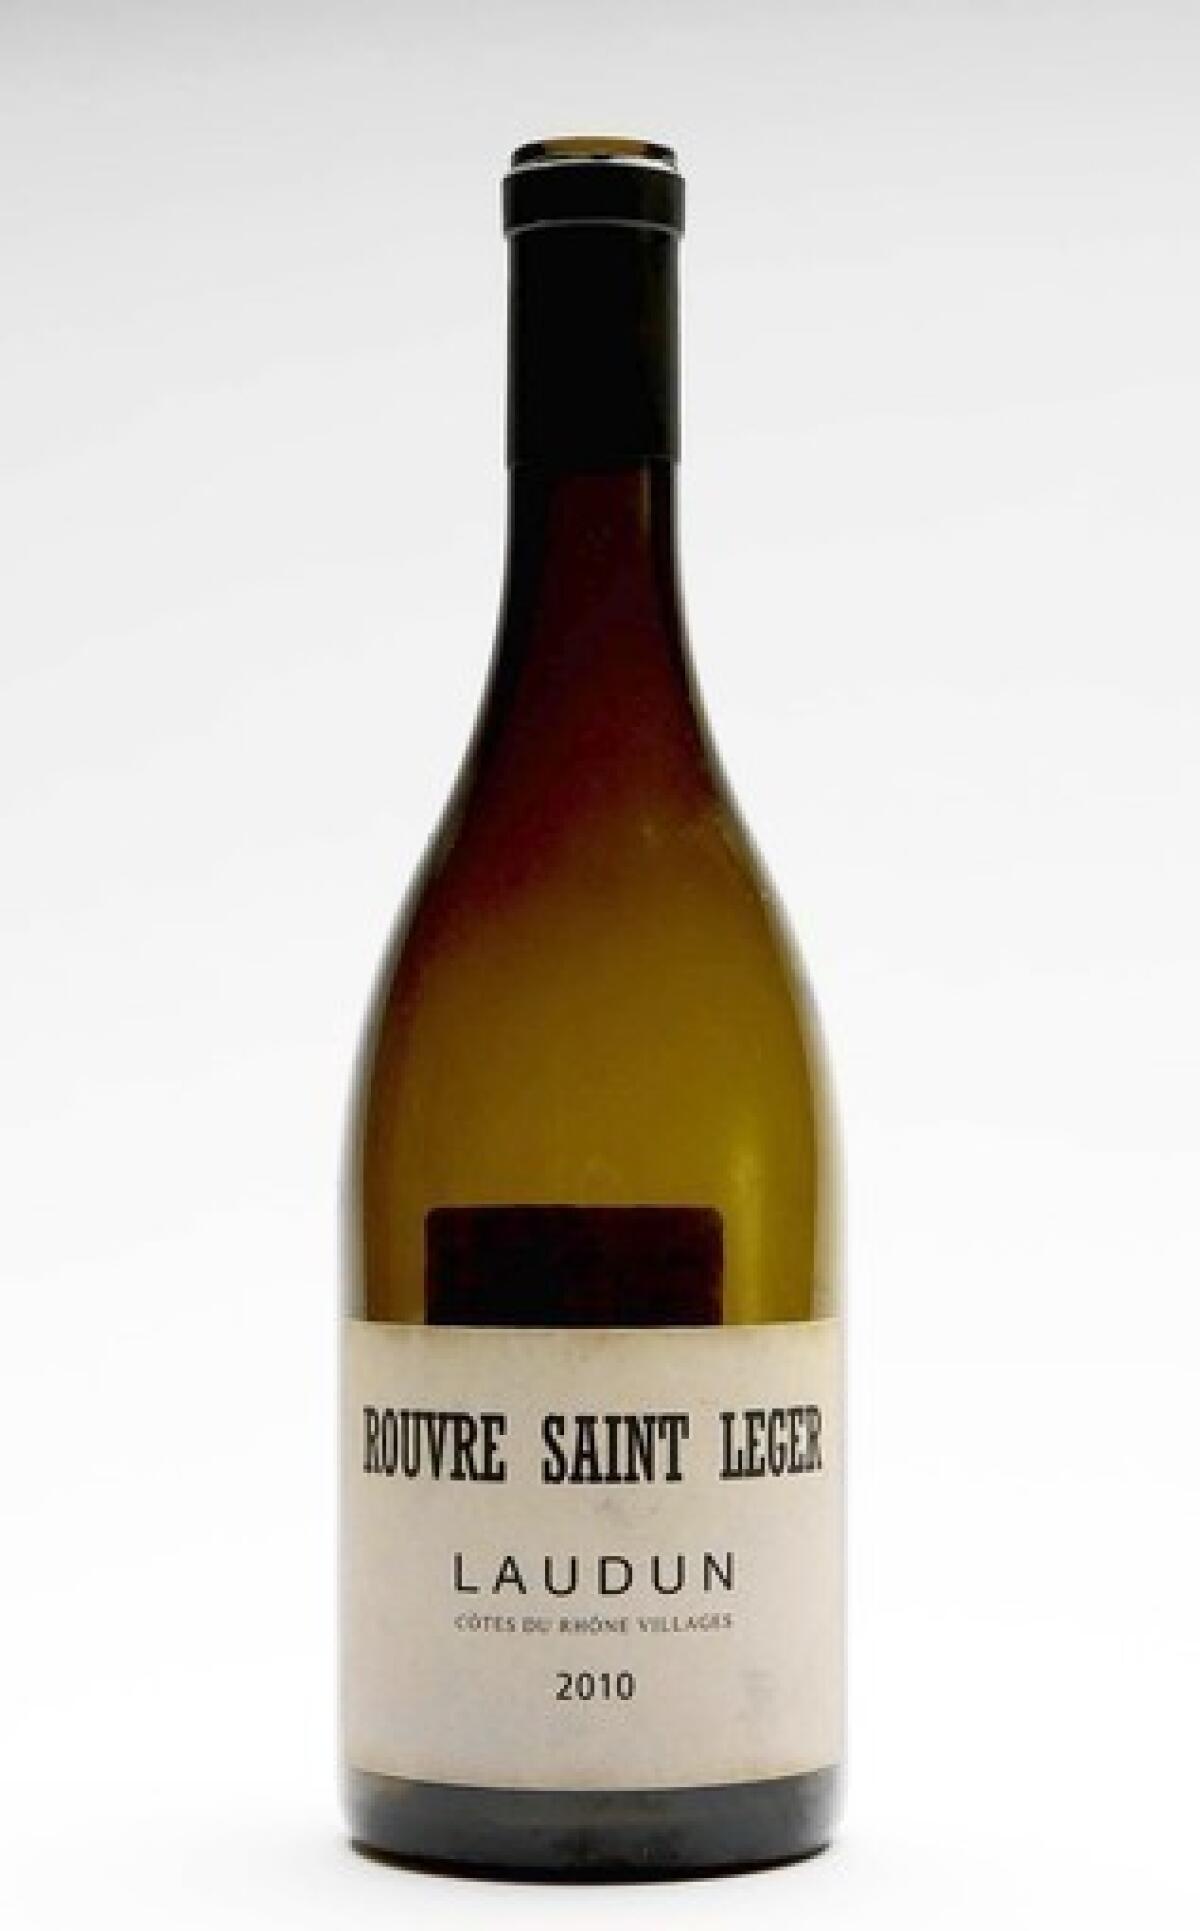 2010 Rouvre Saint Leger "Laudun"